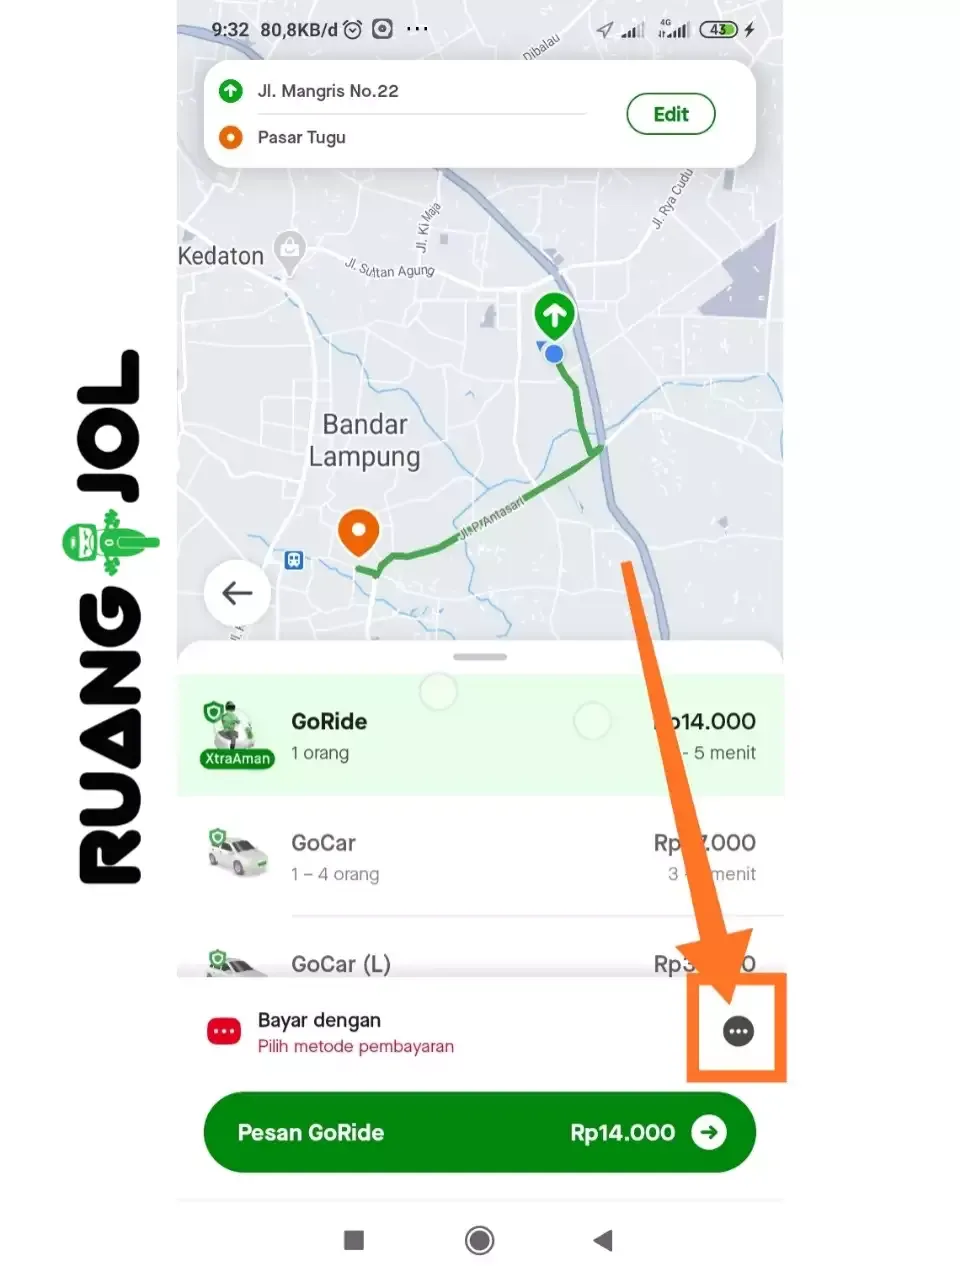 Cara Menggunakan LinkAja untuk Pembayaran di Aplikasi Gojek Customer